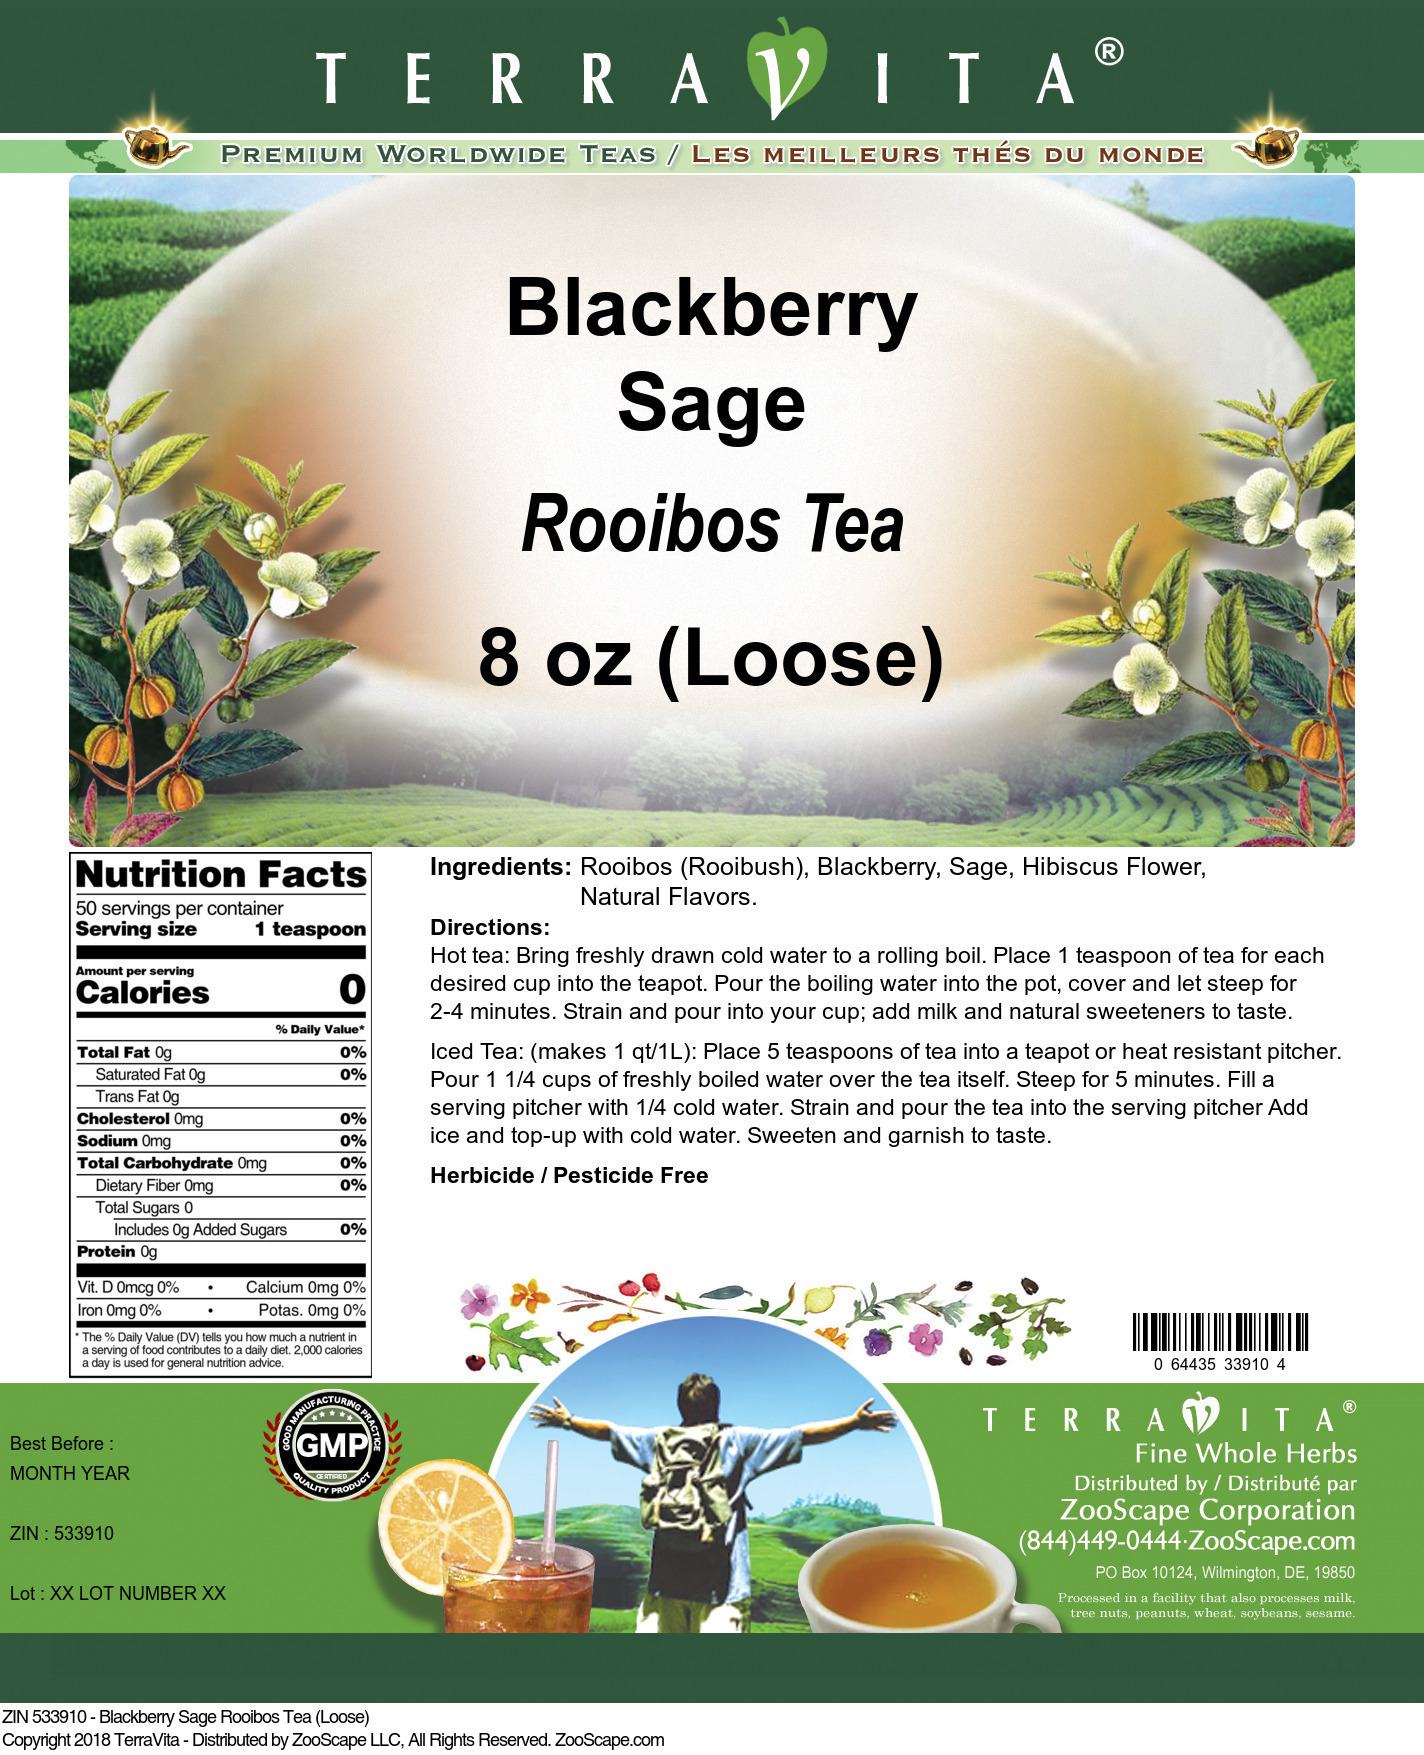 Blackberry Sage Rooibos Tea (Loose) - Label